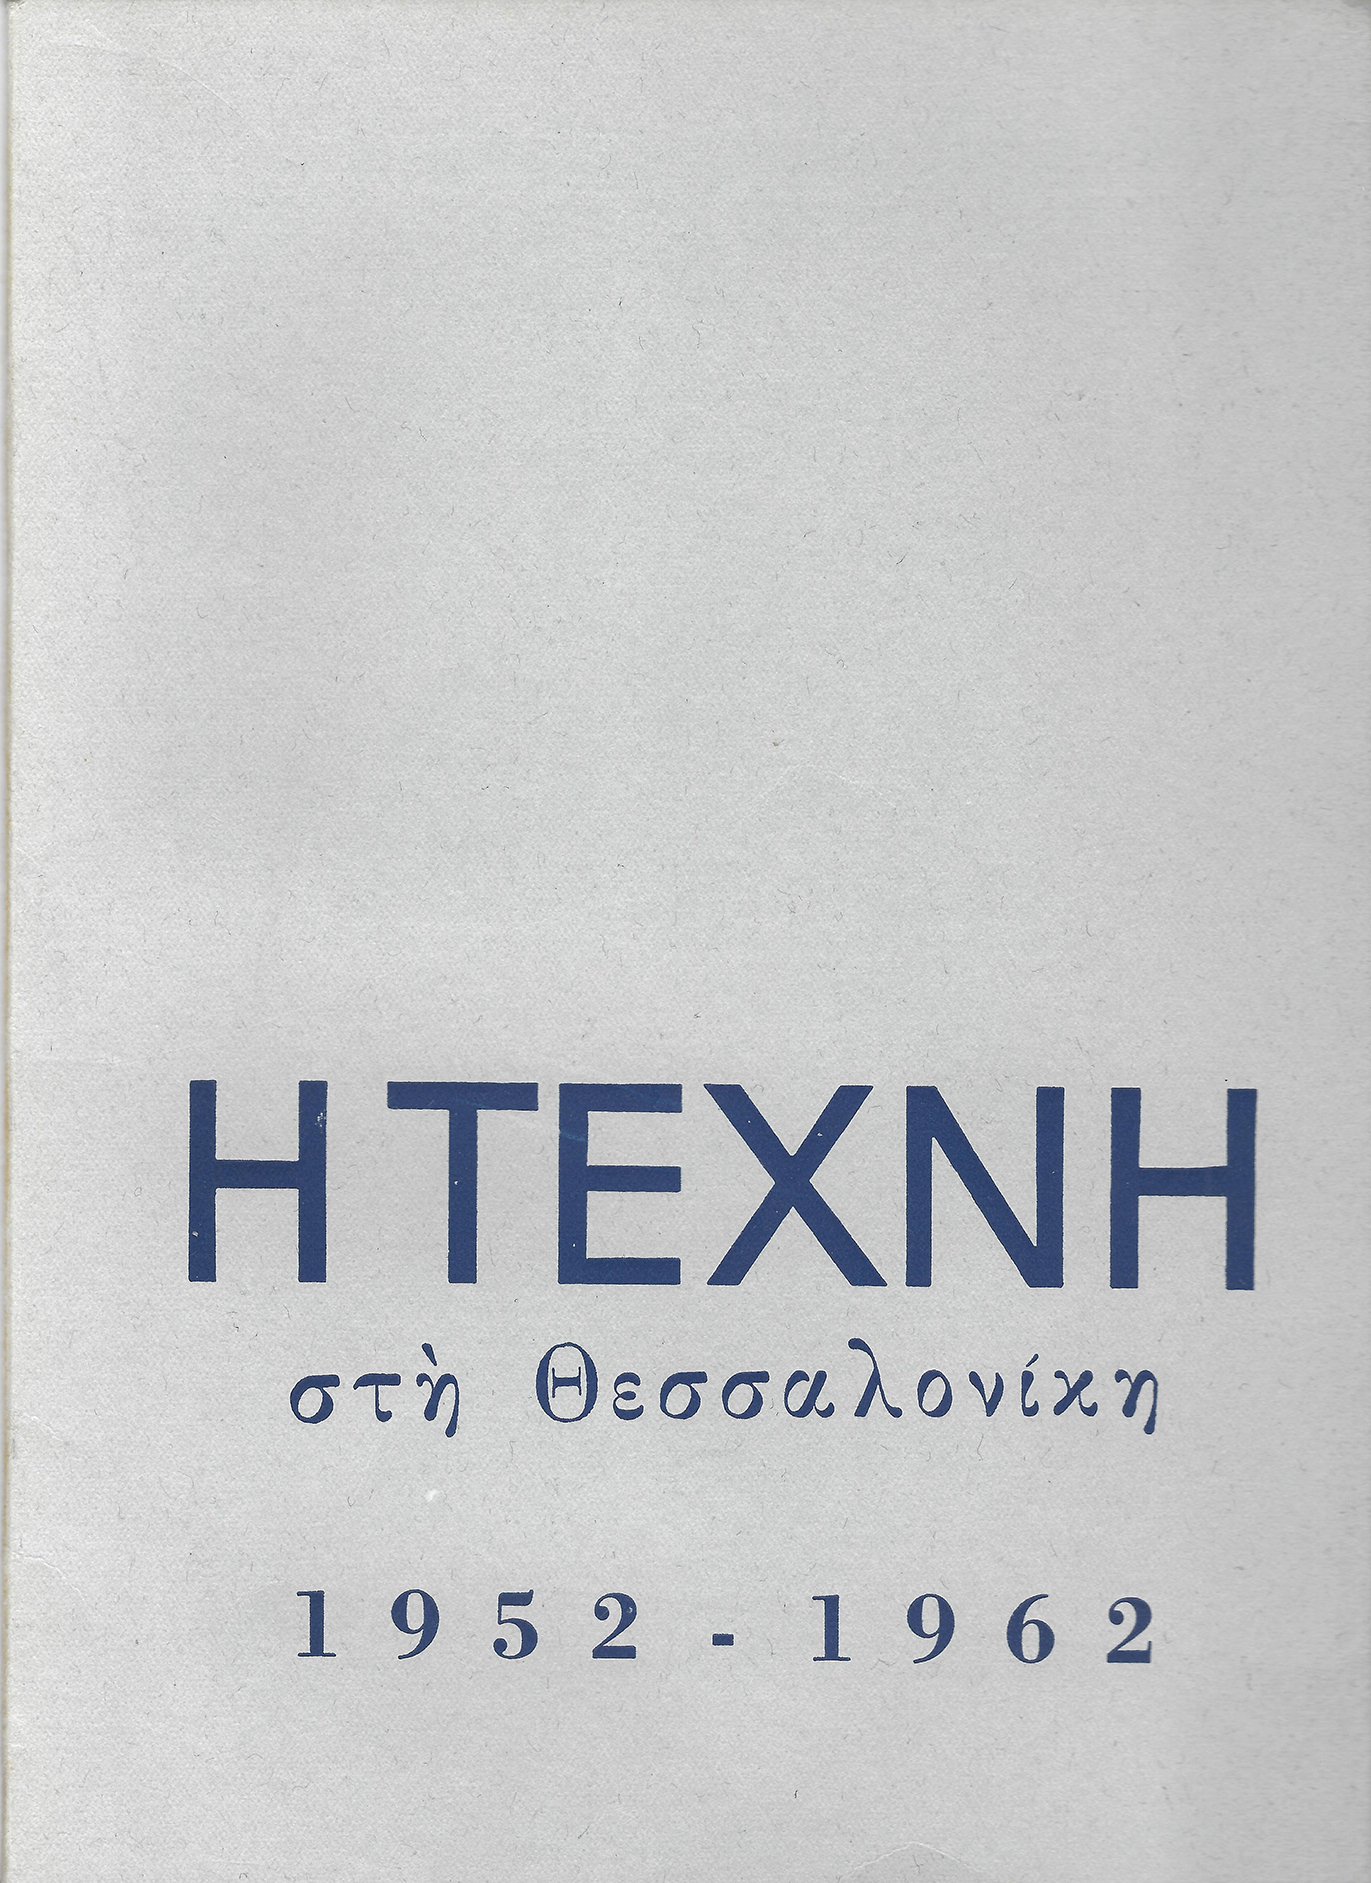 I_TECHNI_STI_THESSALONIKI_DEKAETIRIDA_1963.jpg